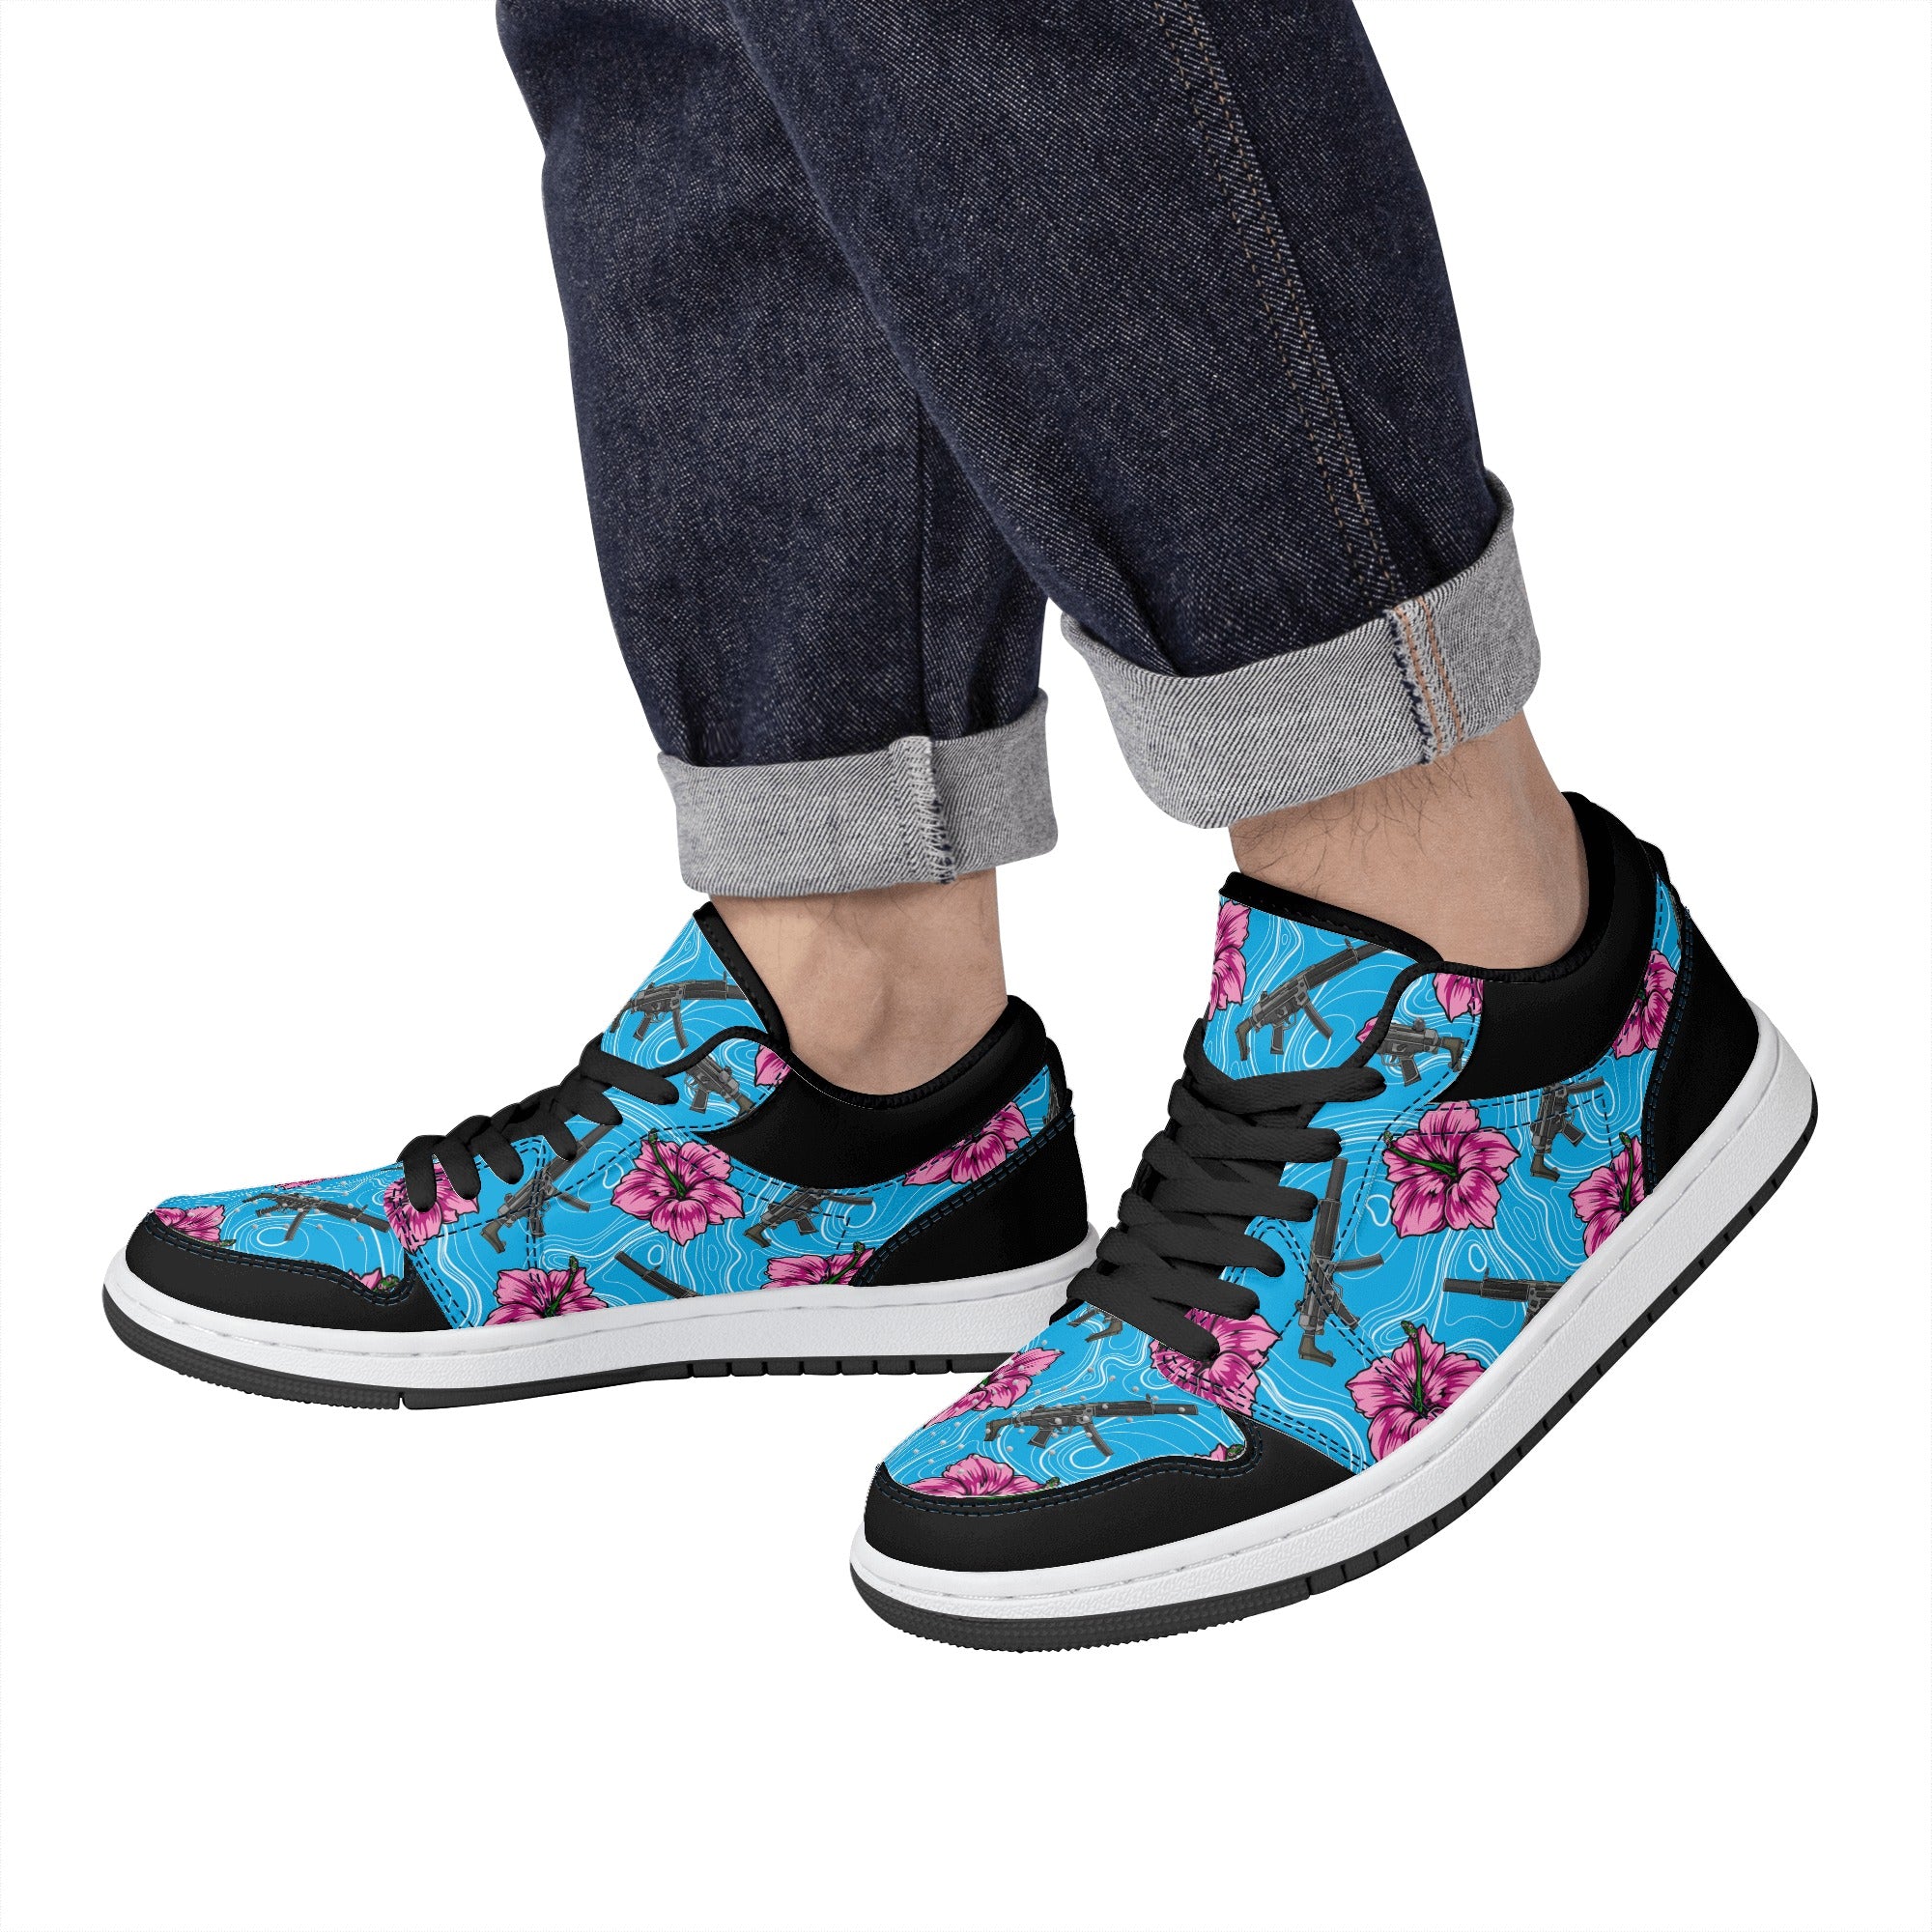 Rad Palm High Capacity Hibiscus Blue Men's Low Top Skateboard Sneakers